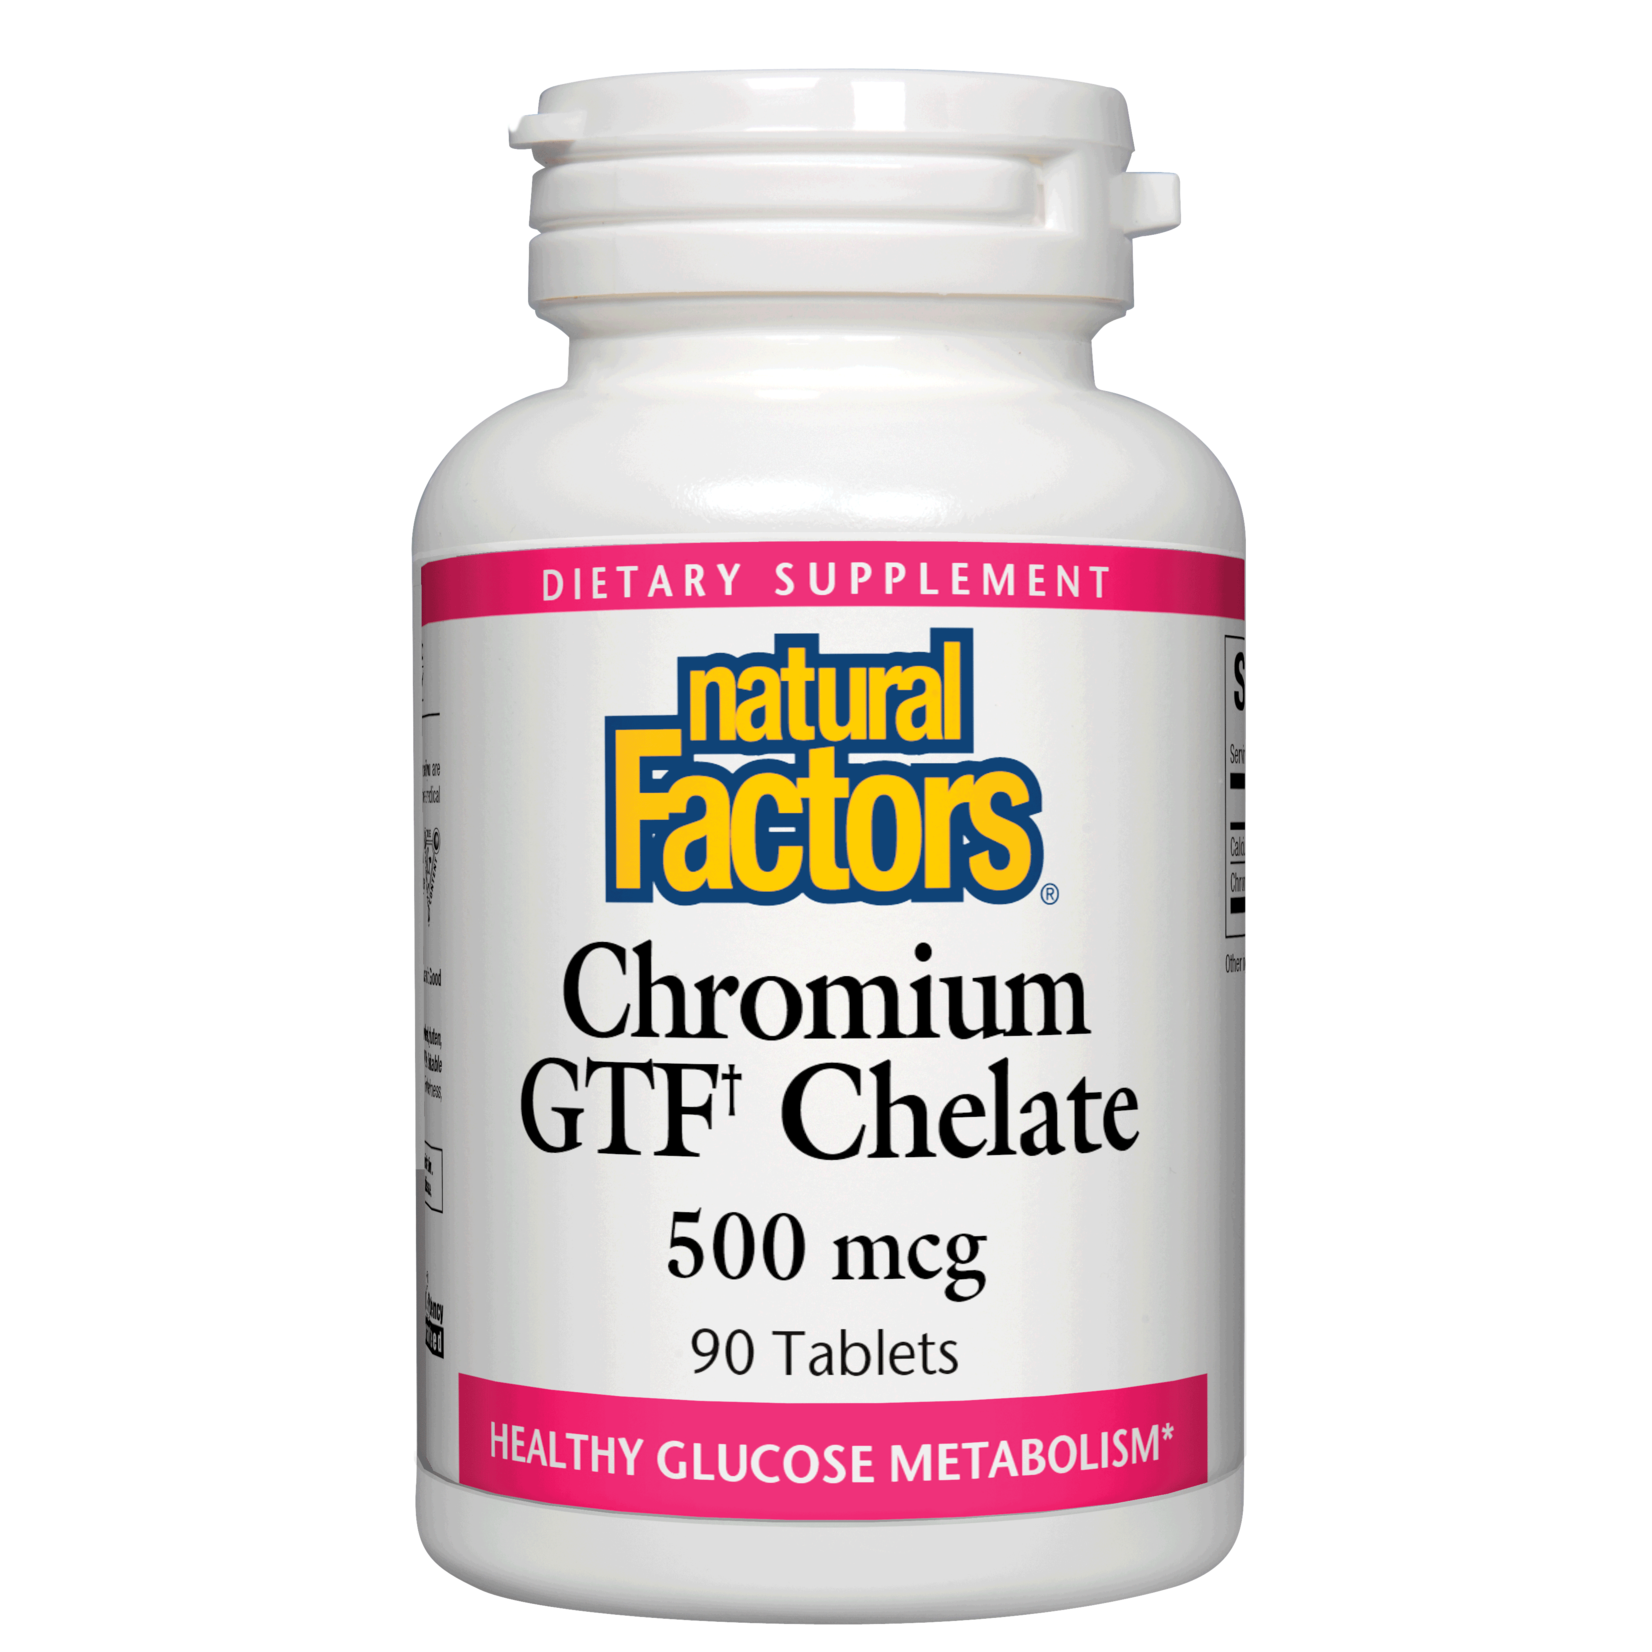 Natural Factors Natural Factors - Chromium GTF Chelate 500 mcg - 90 Tablets